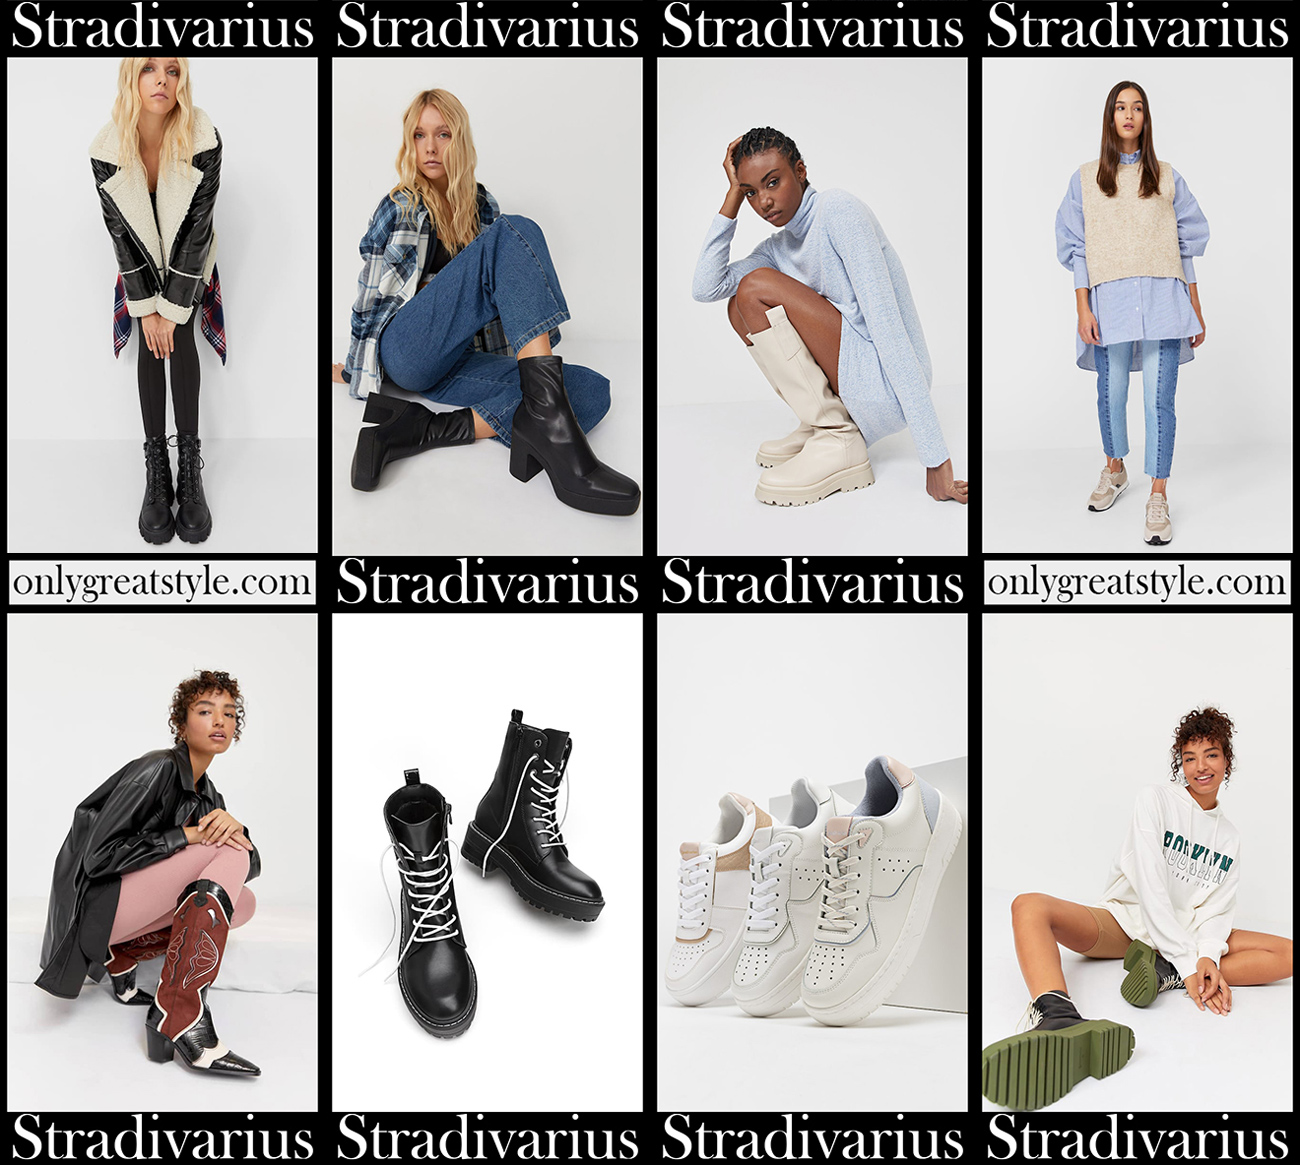 Stradivarius shoes 2021 new arrivals womens footwear